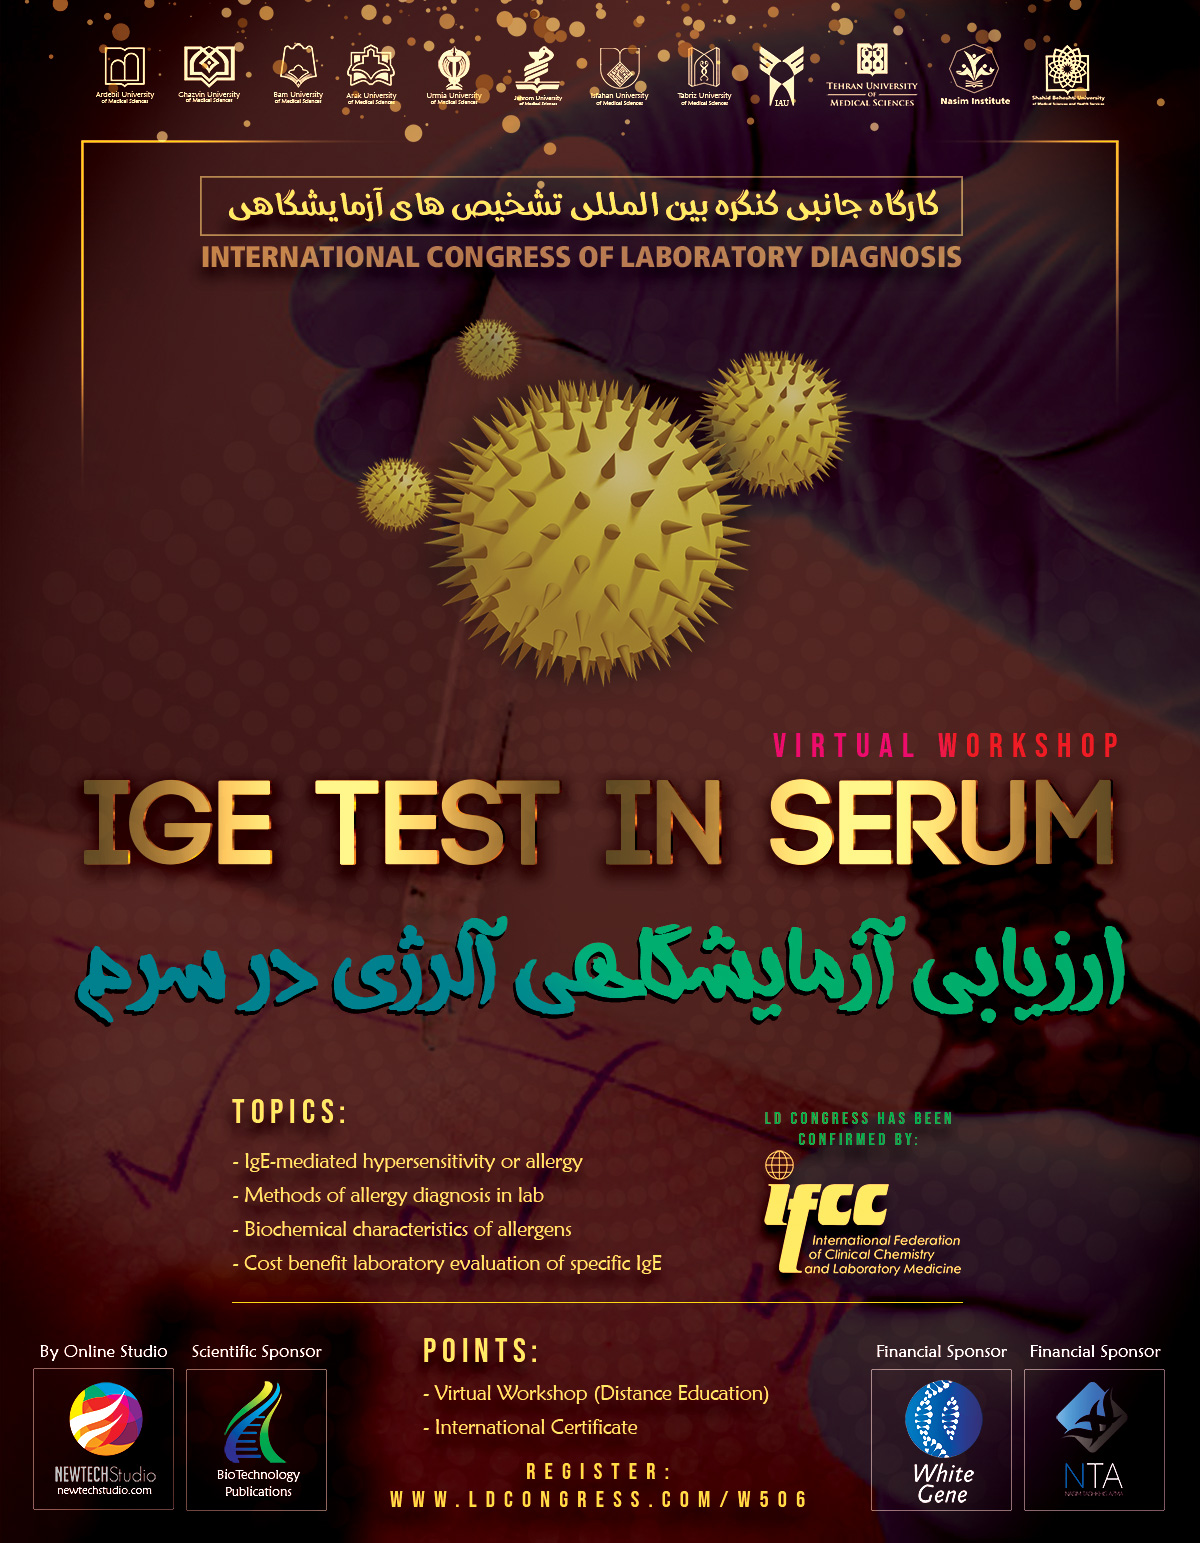 Laboratory Evaluation of Allergy (serum specific IgE test)